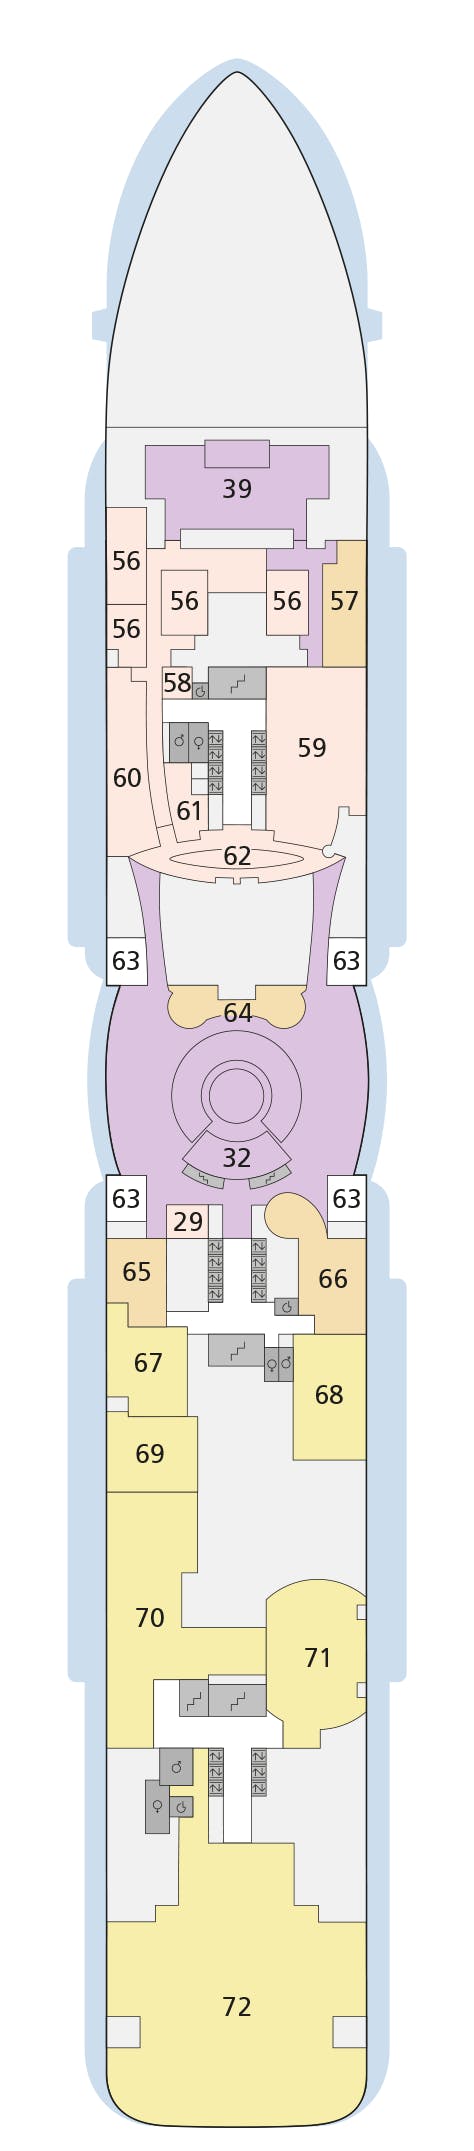 AIDAnova - AIDA Cruises - Deck 6 (Deck 6)